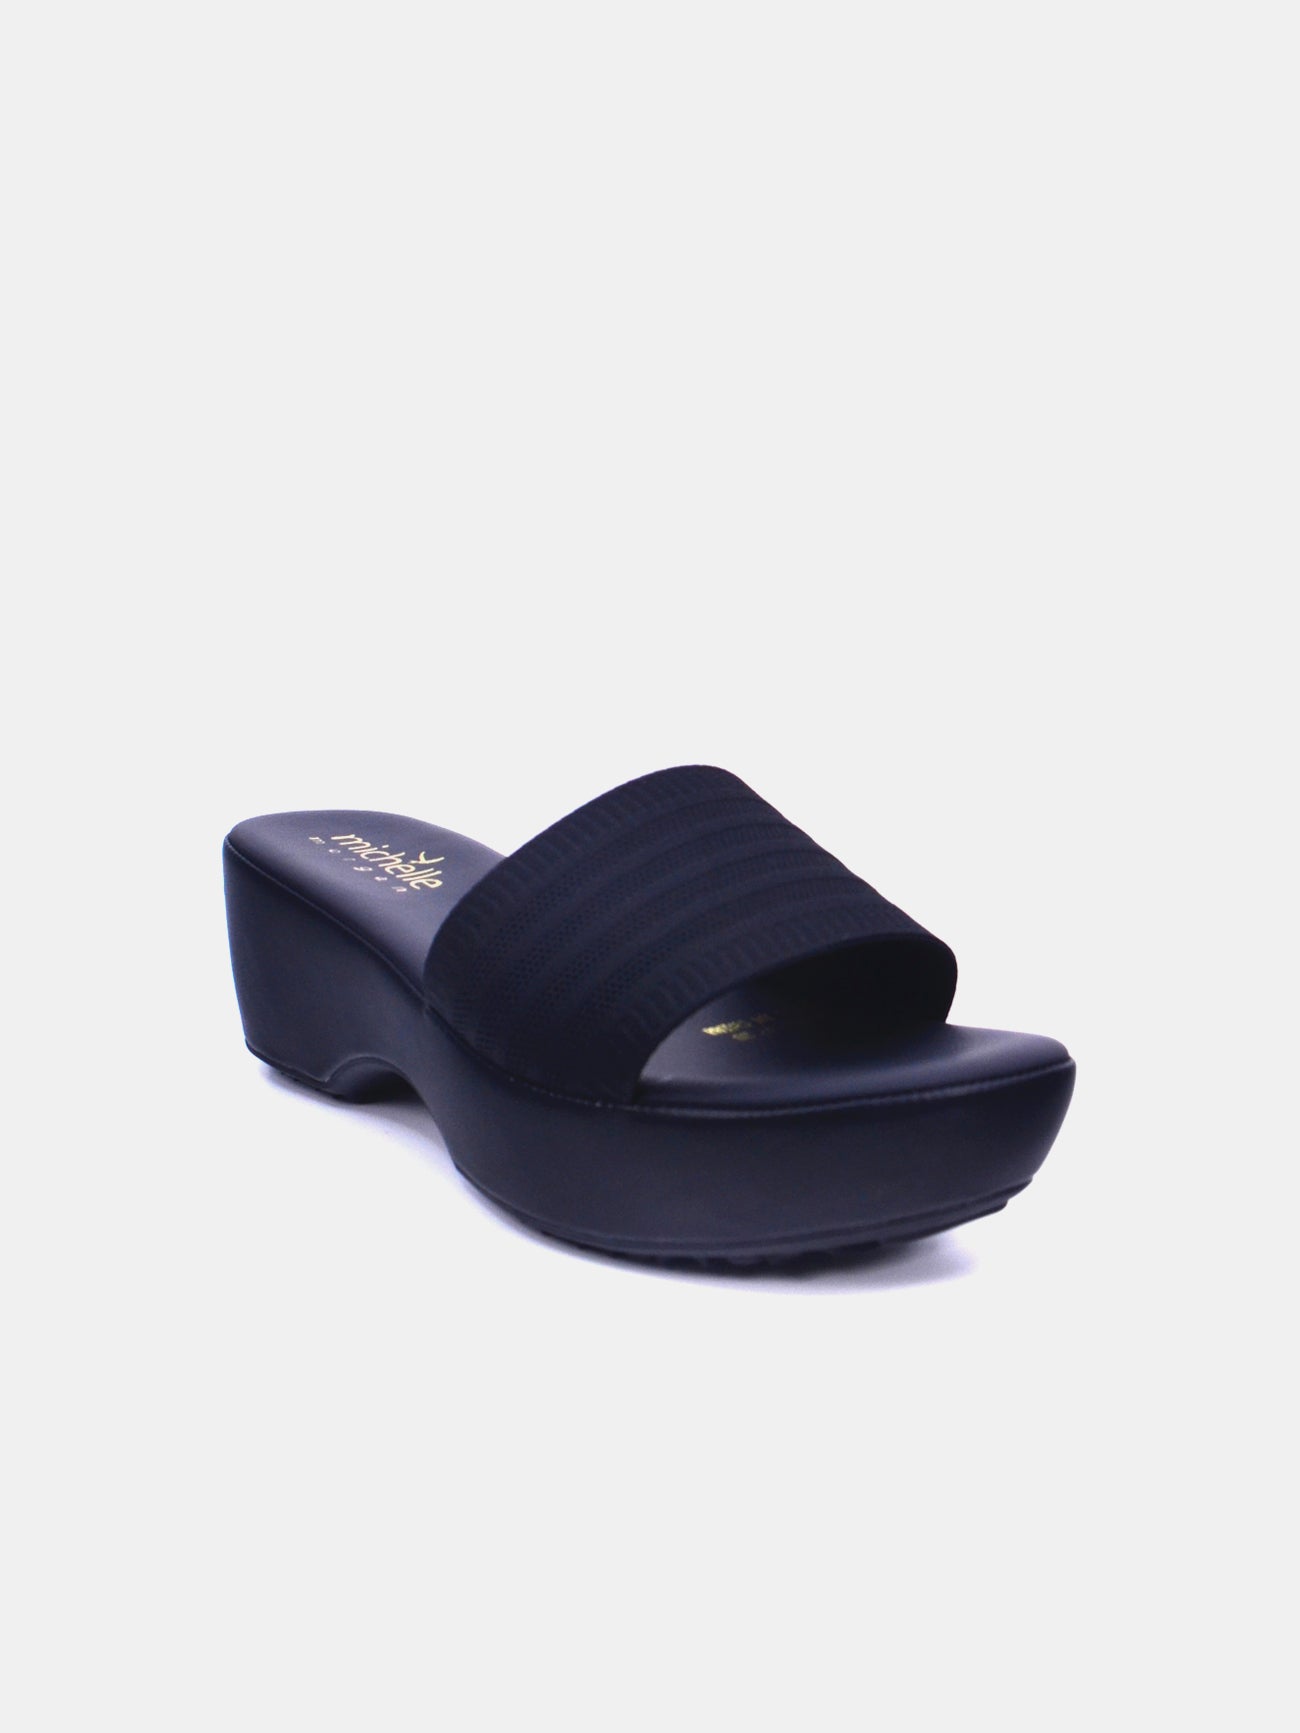 Michelle Morgan 214RJL17 Women's Heeled Sandals #color_Black